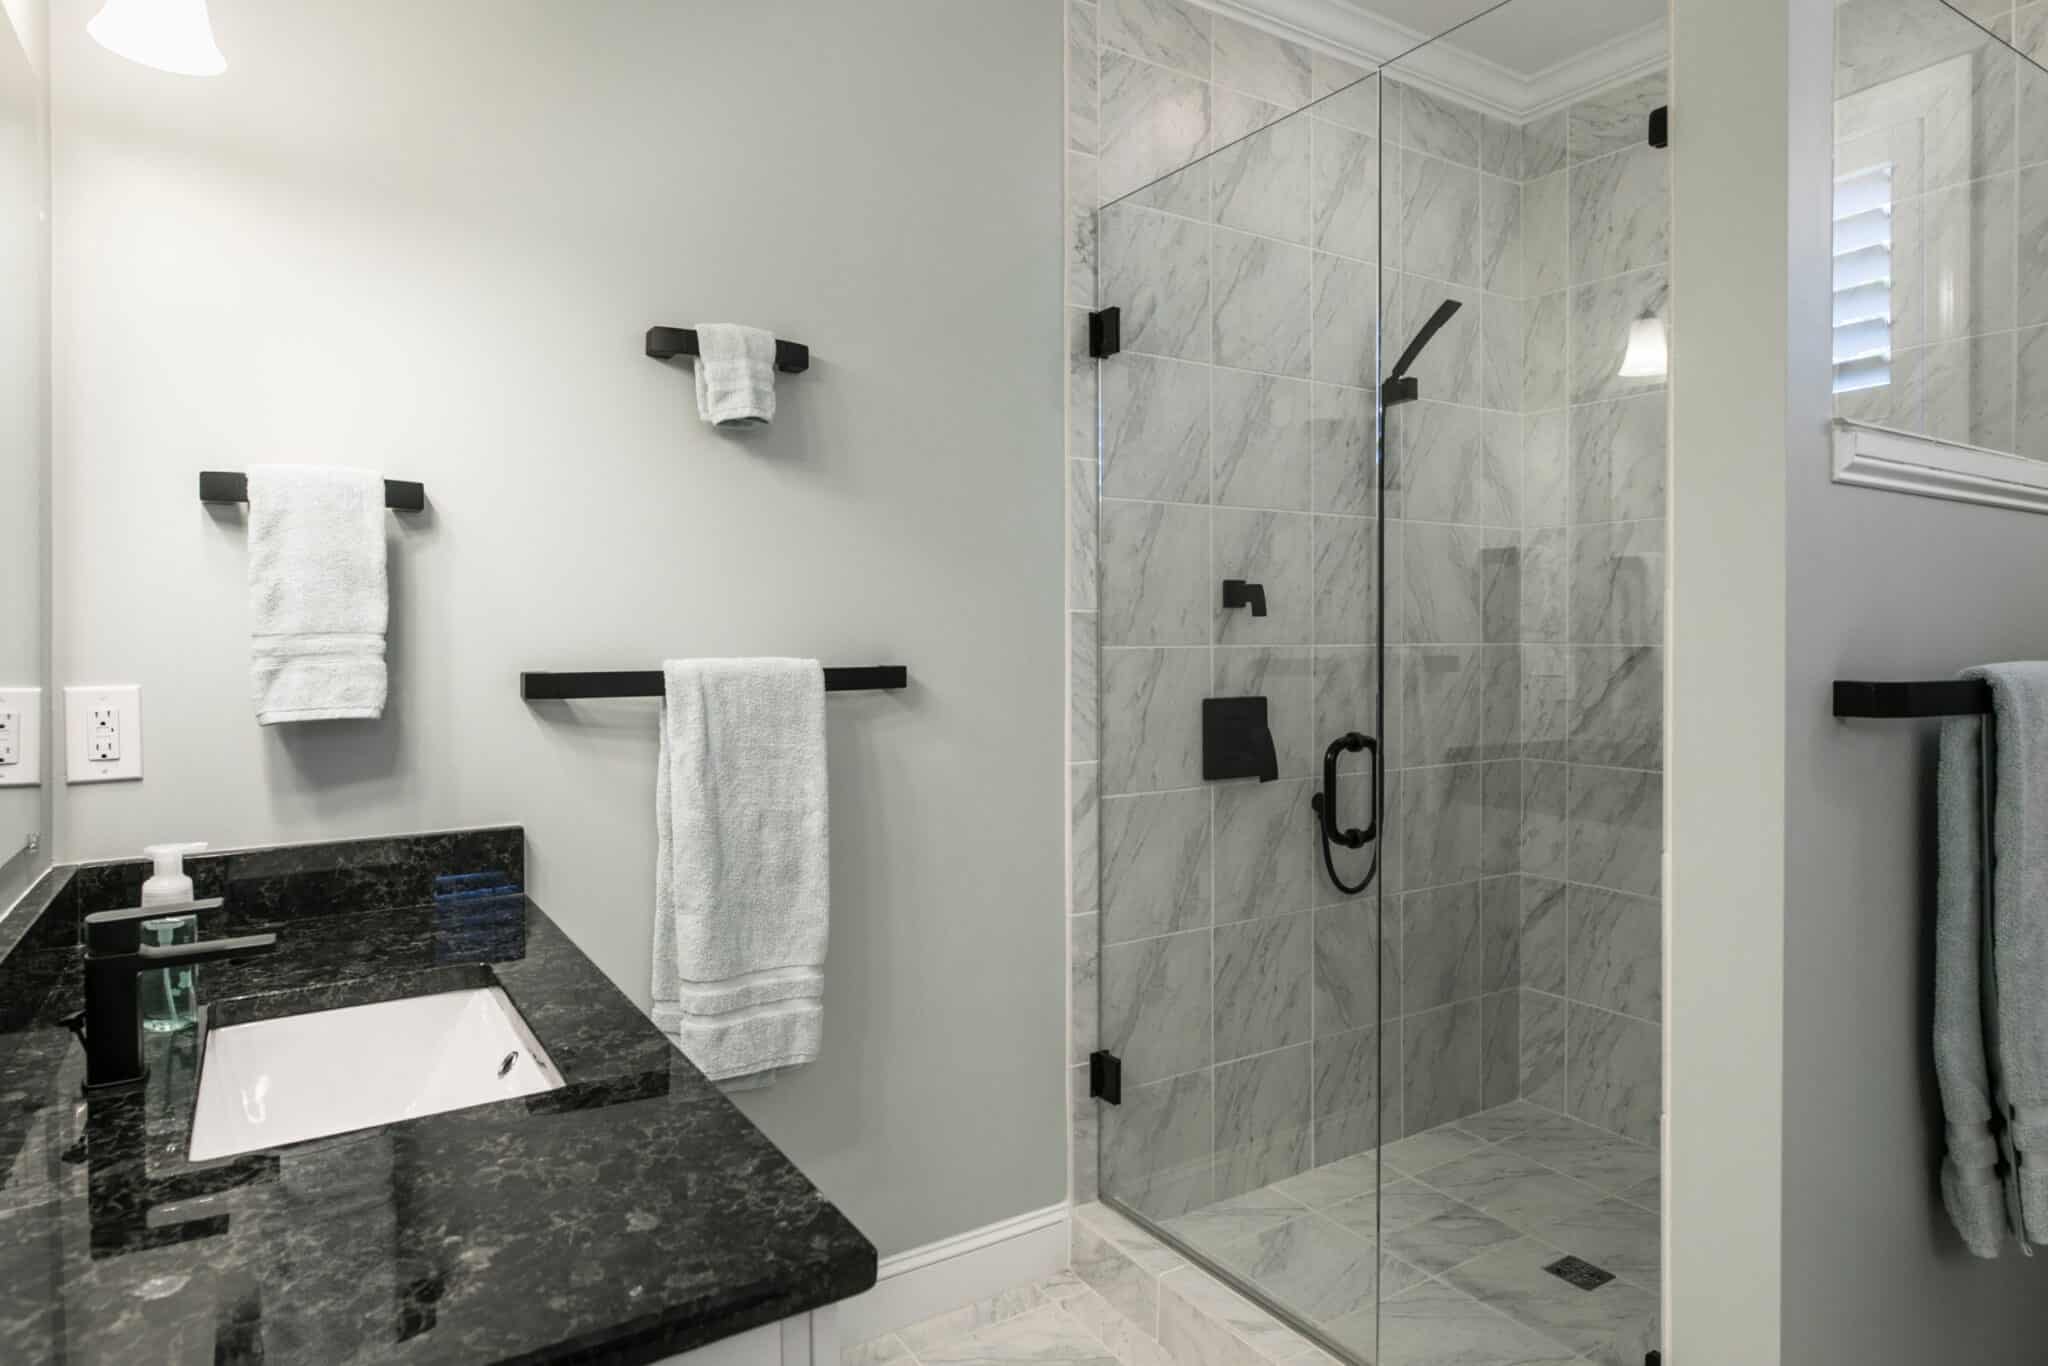 Bathroom remodel using the existing towel hangers.